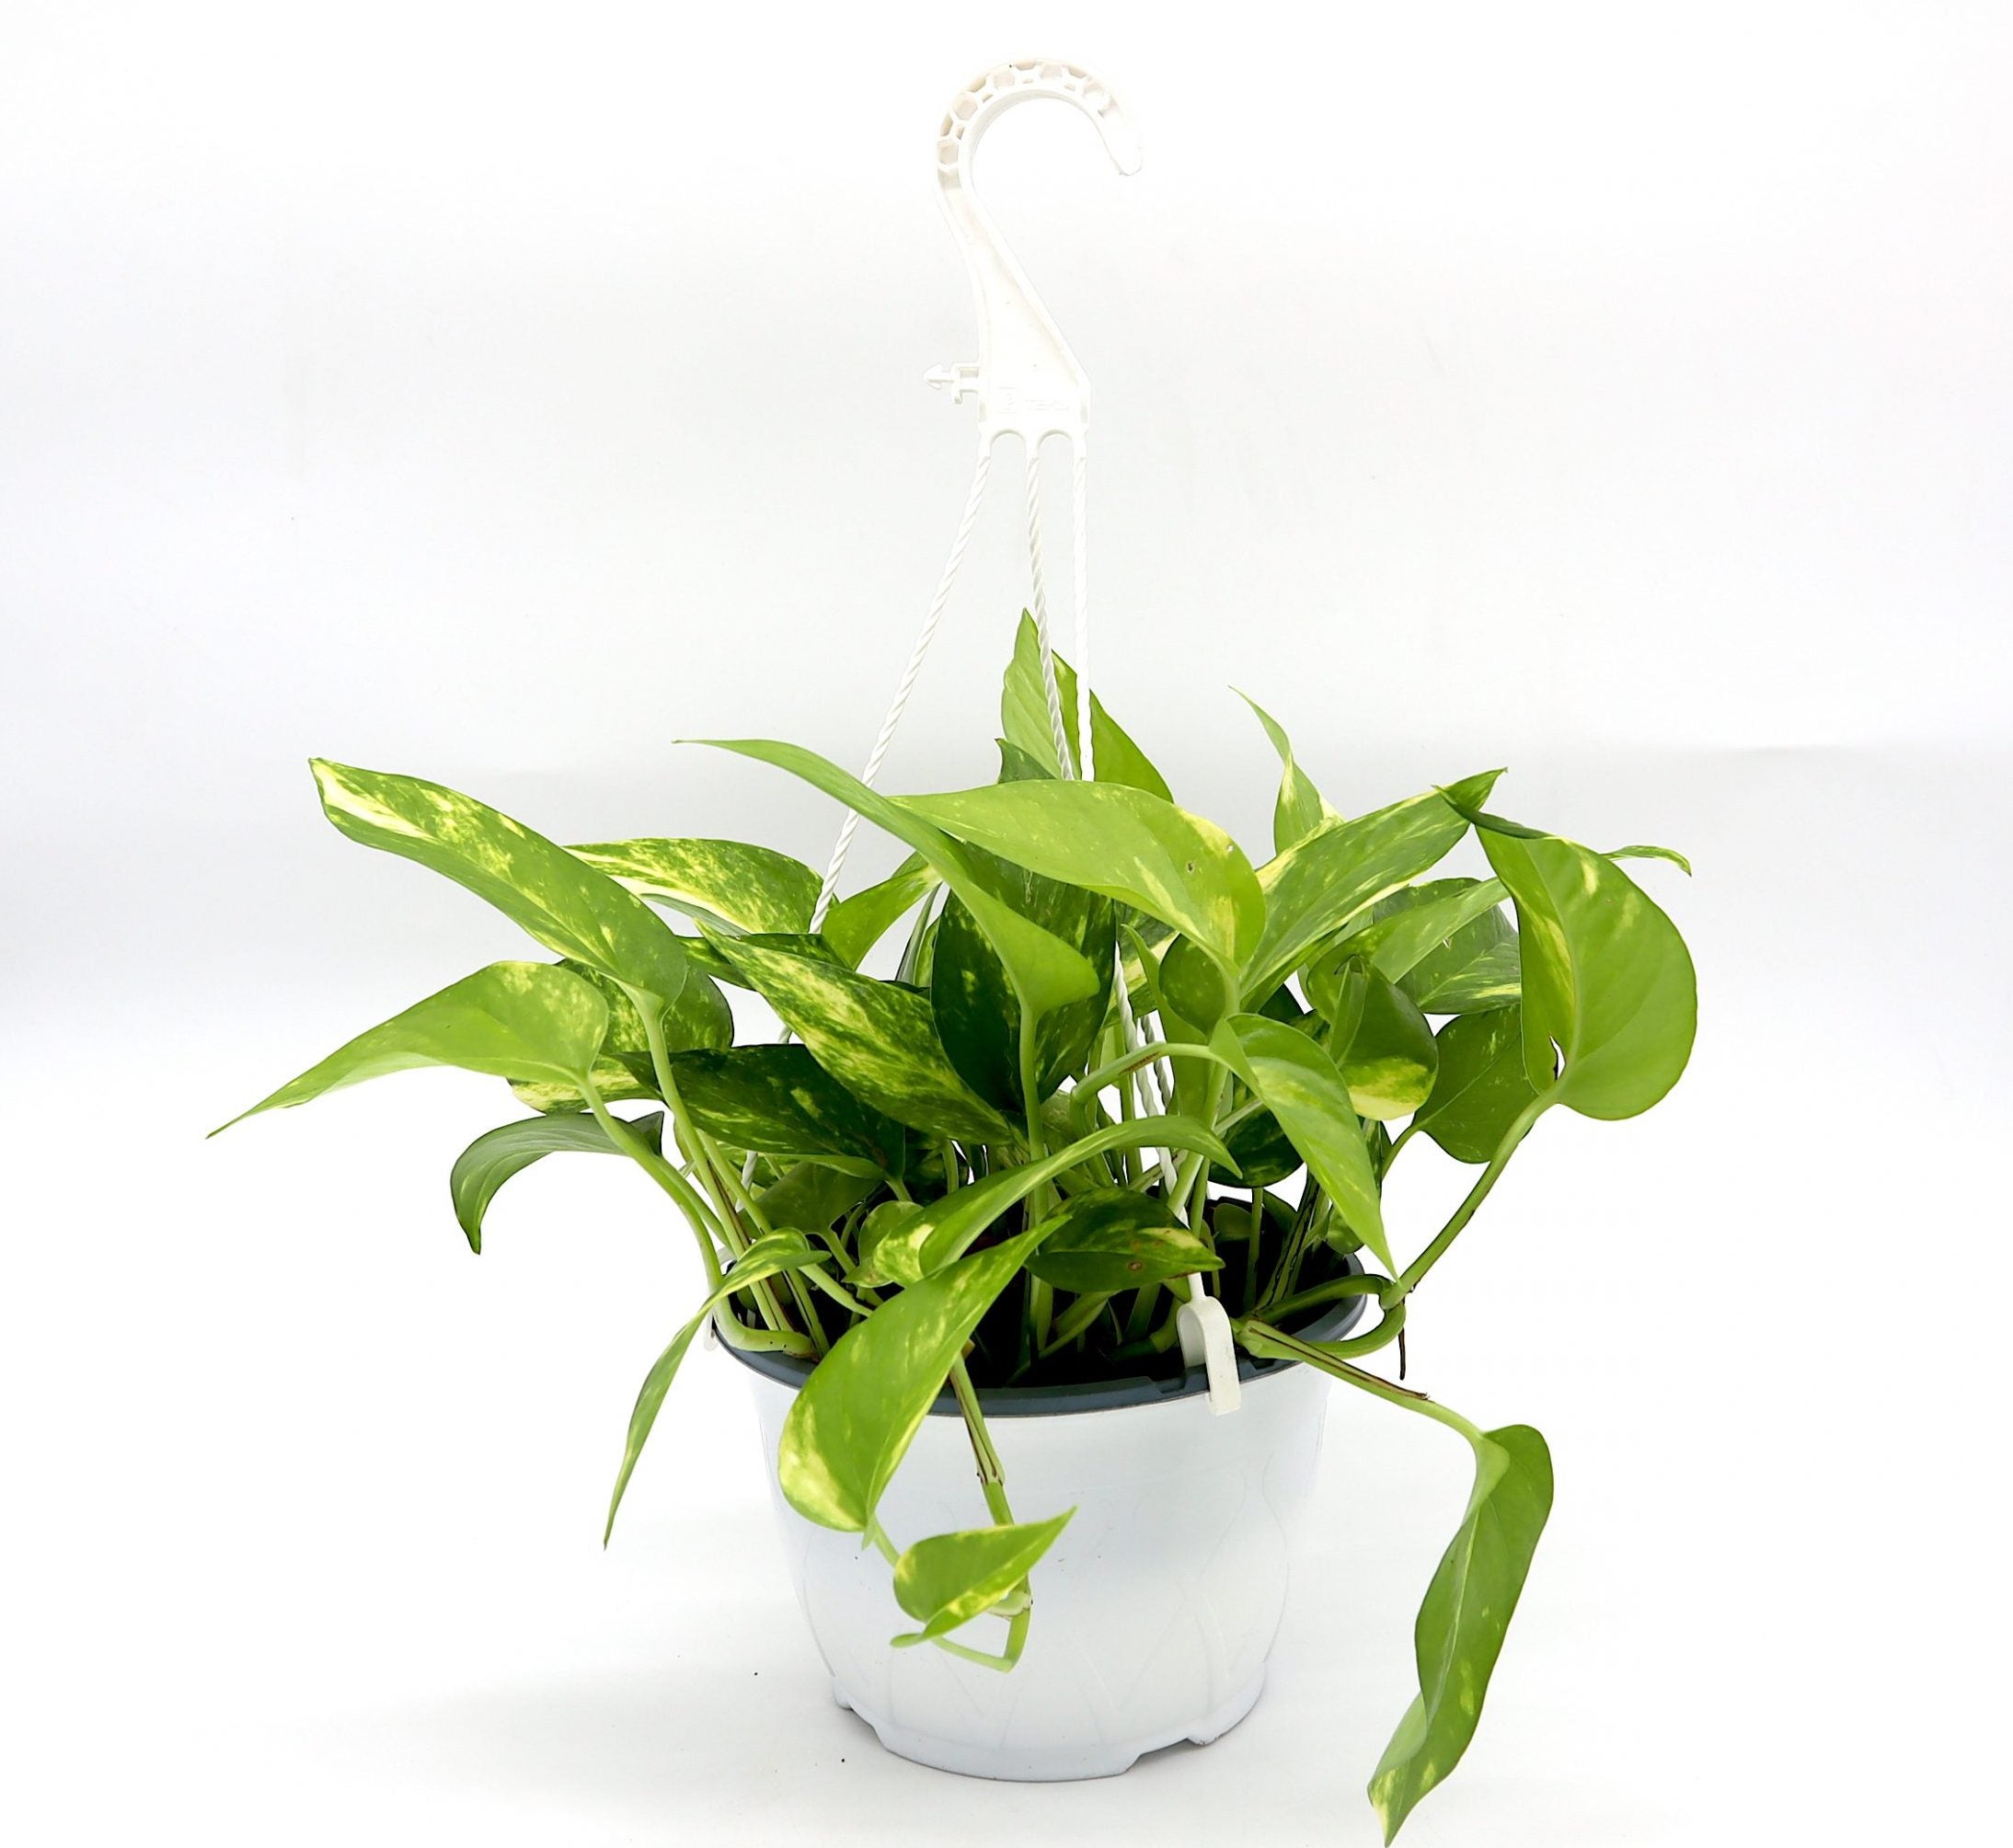 Hanging Money Plant “Epipremnum aureum